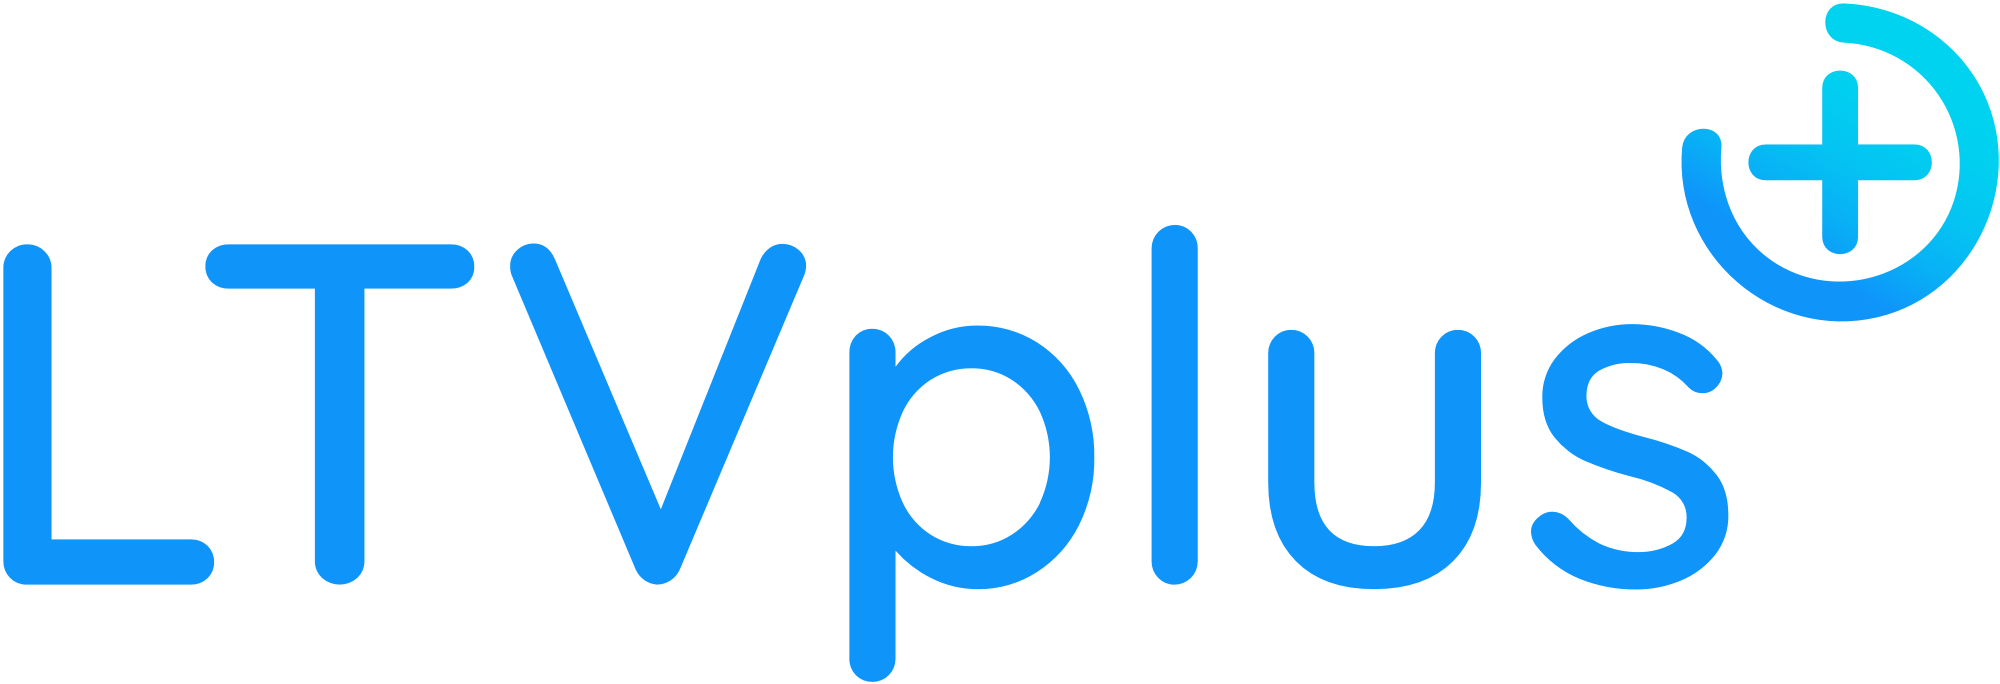 ltvplus logo